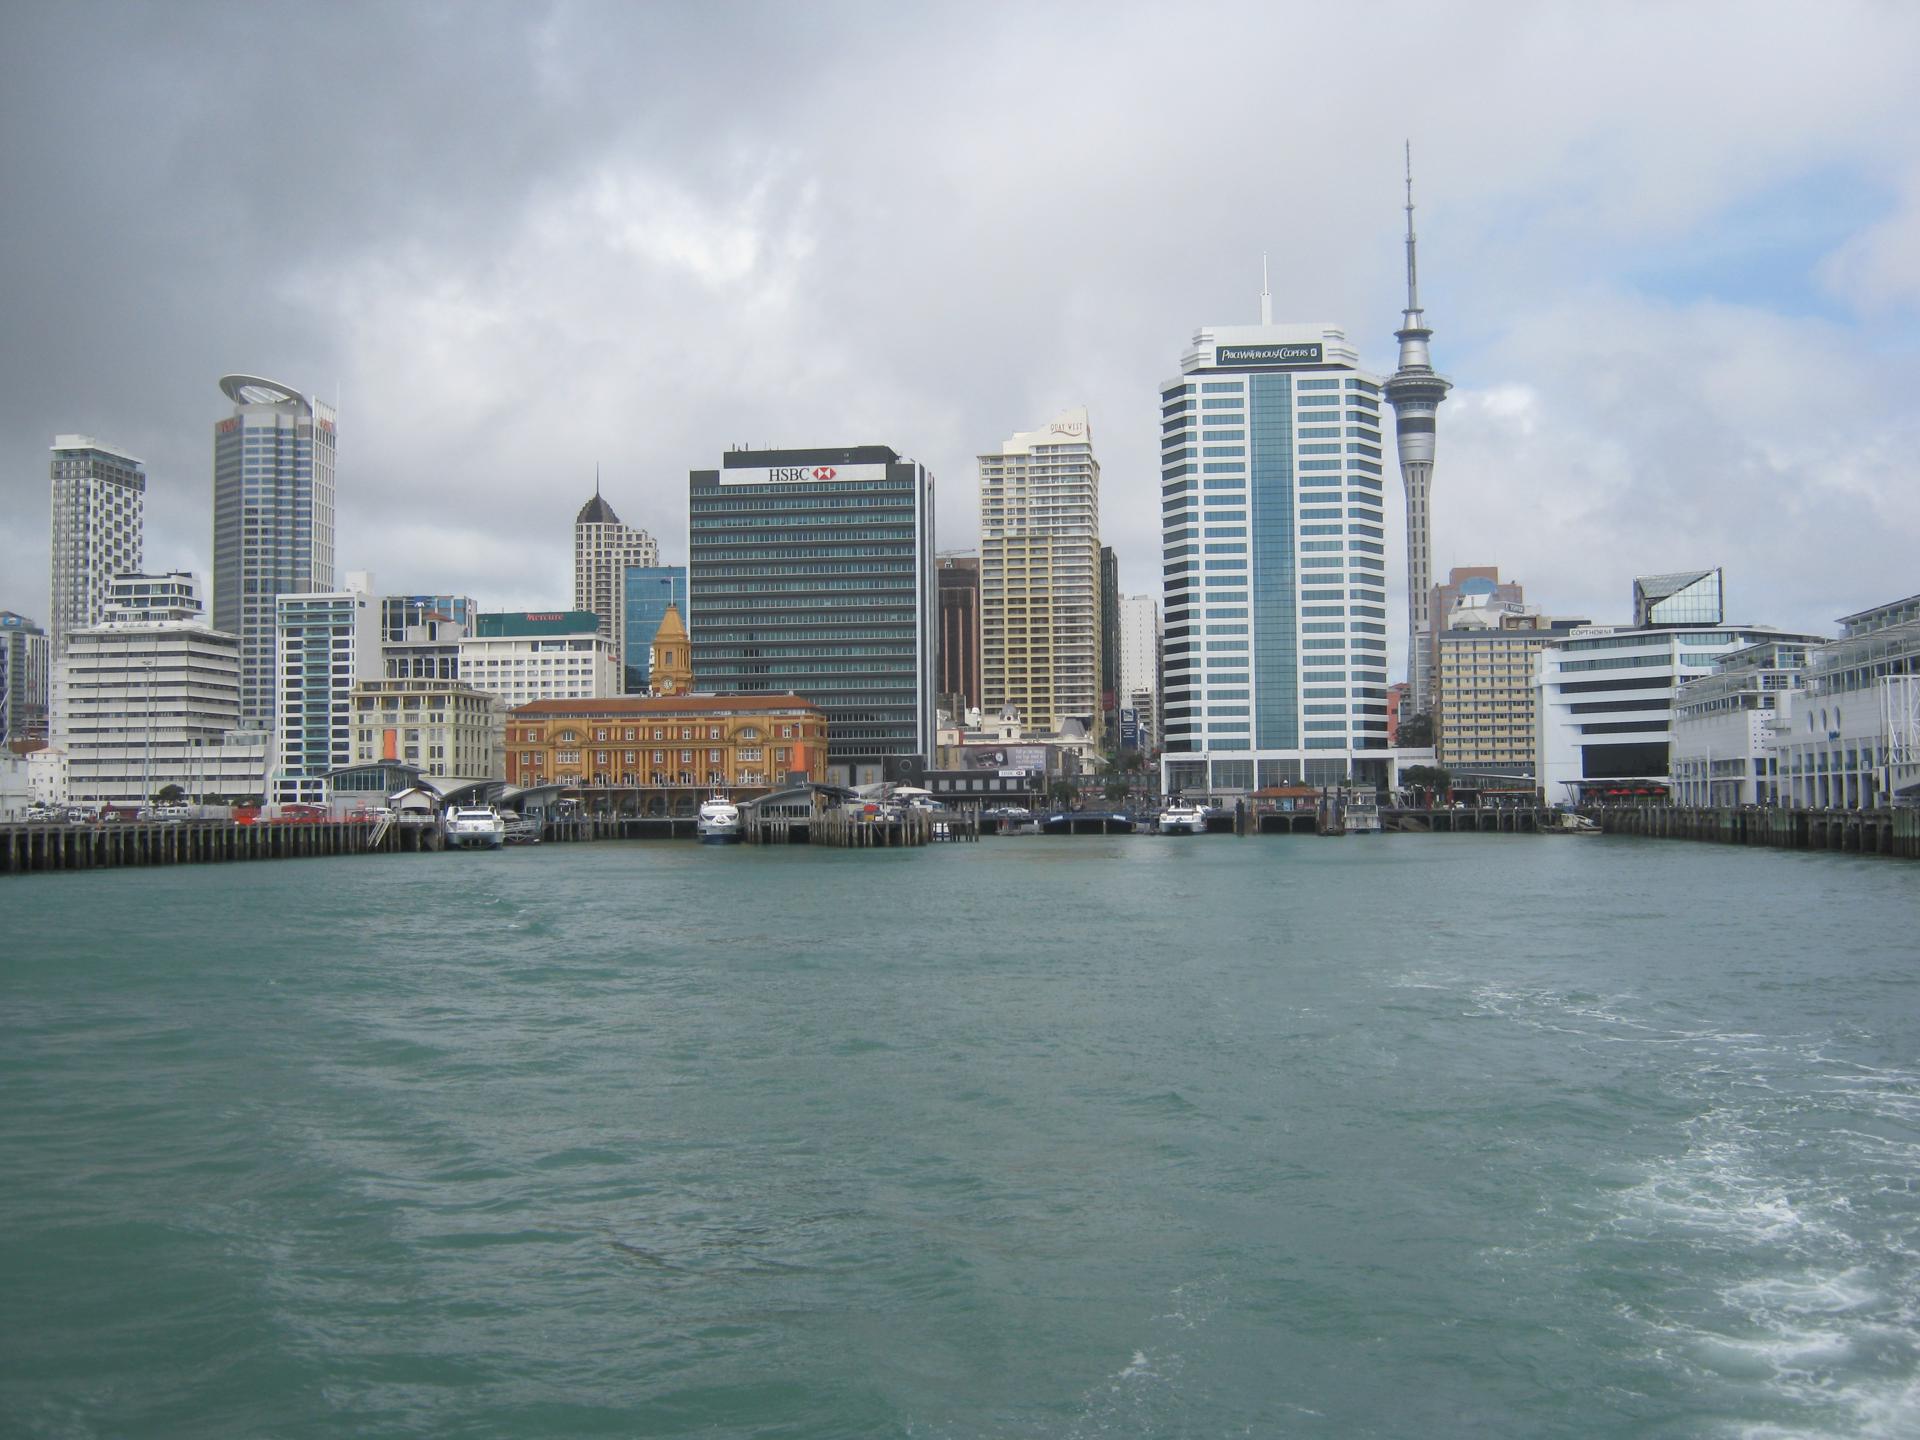 Auckland city as seen from the Hauraki Gulf, on Sept. 25, 2010. EFE FILE/TARYN WILSON
